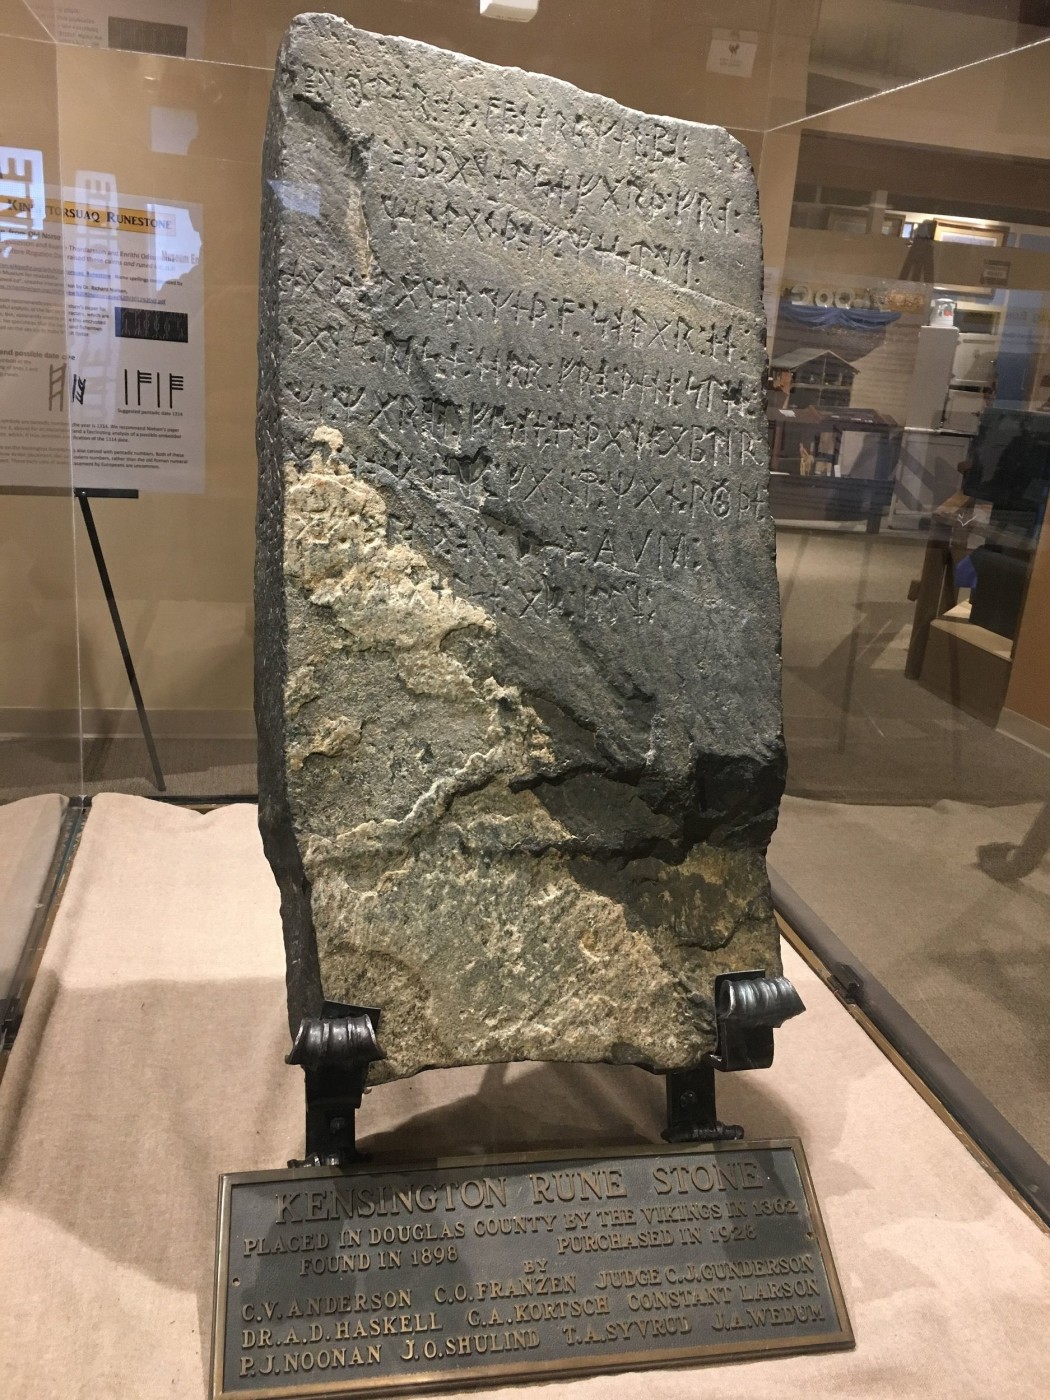 USA - La pierre de Kensington exposée au Musée d'Alexandria, dans le Minnesota - Photo: Mauricio Valle /Wikimedia